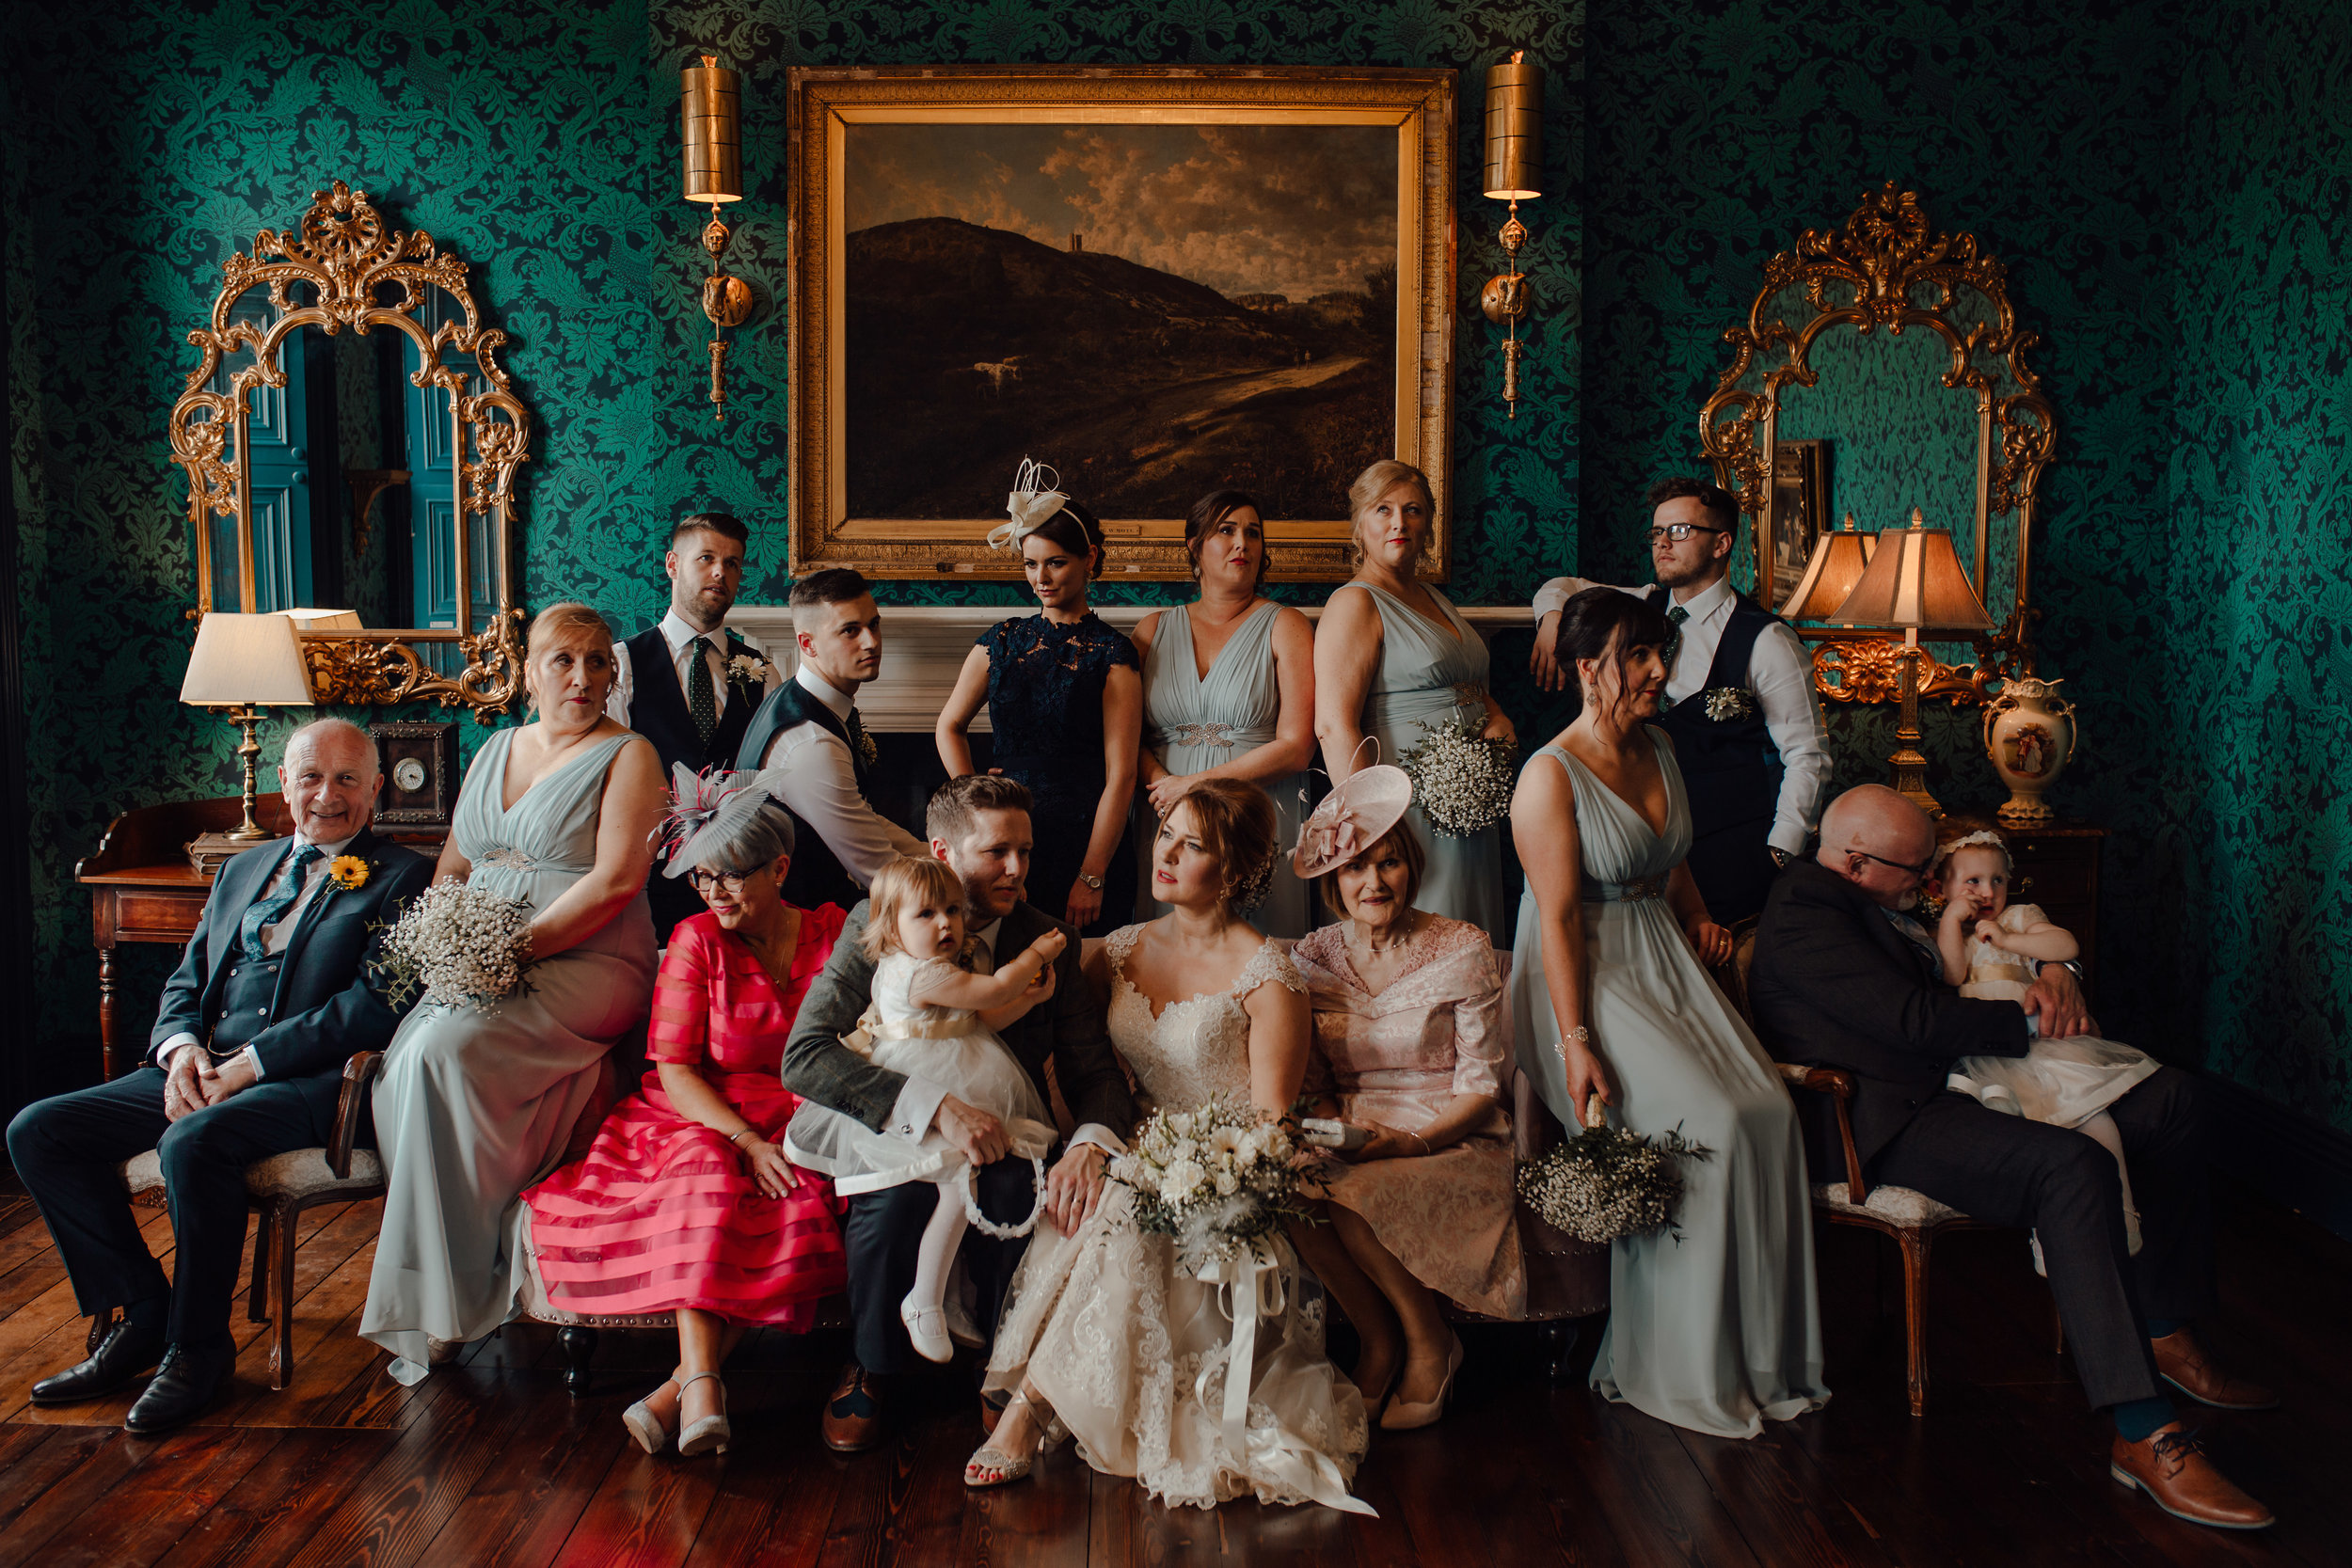 boyne-hill-house-vanity-fair-portrait-wedding-photographer-ireland